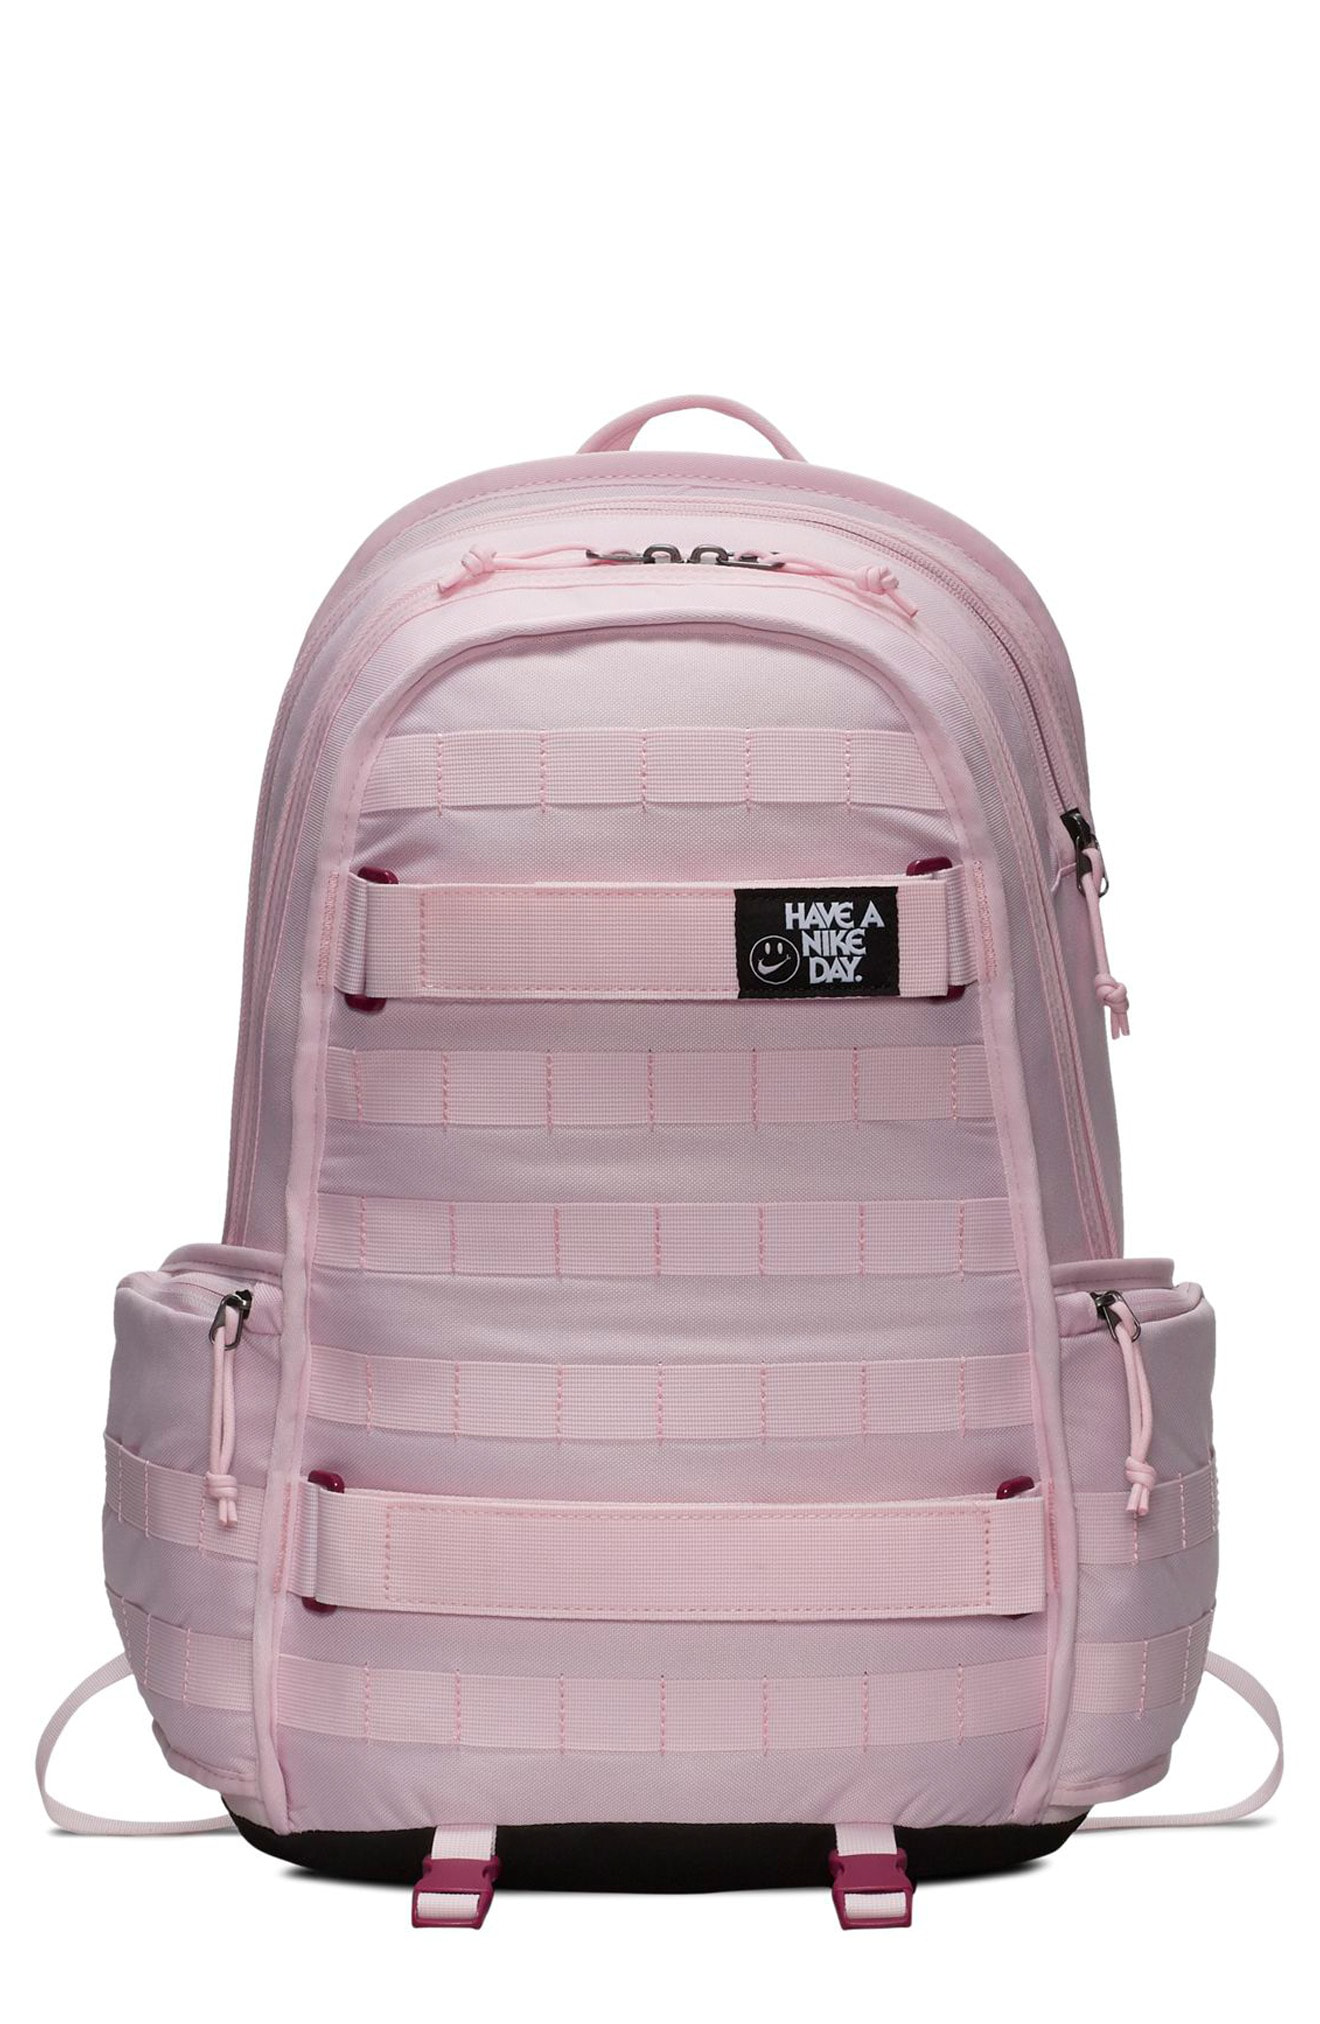 nike rpm backpack pink